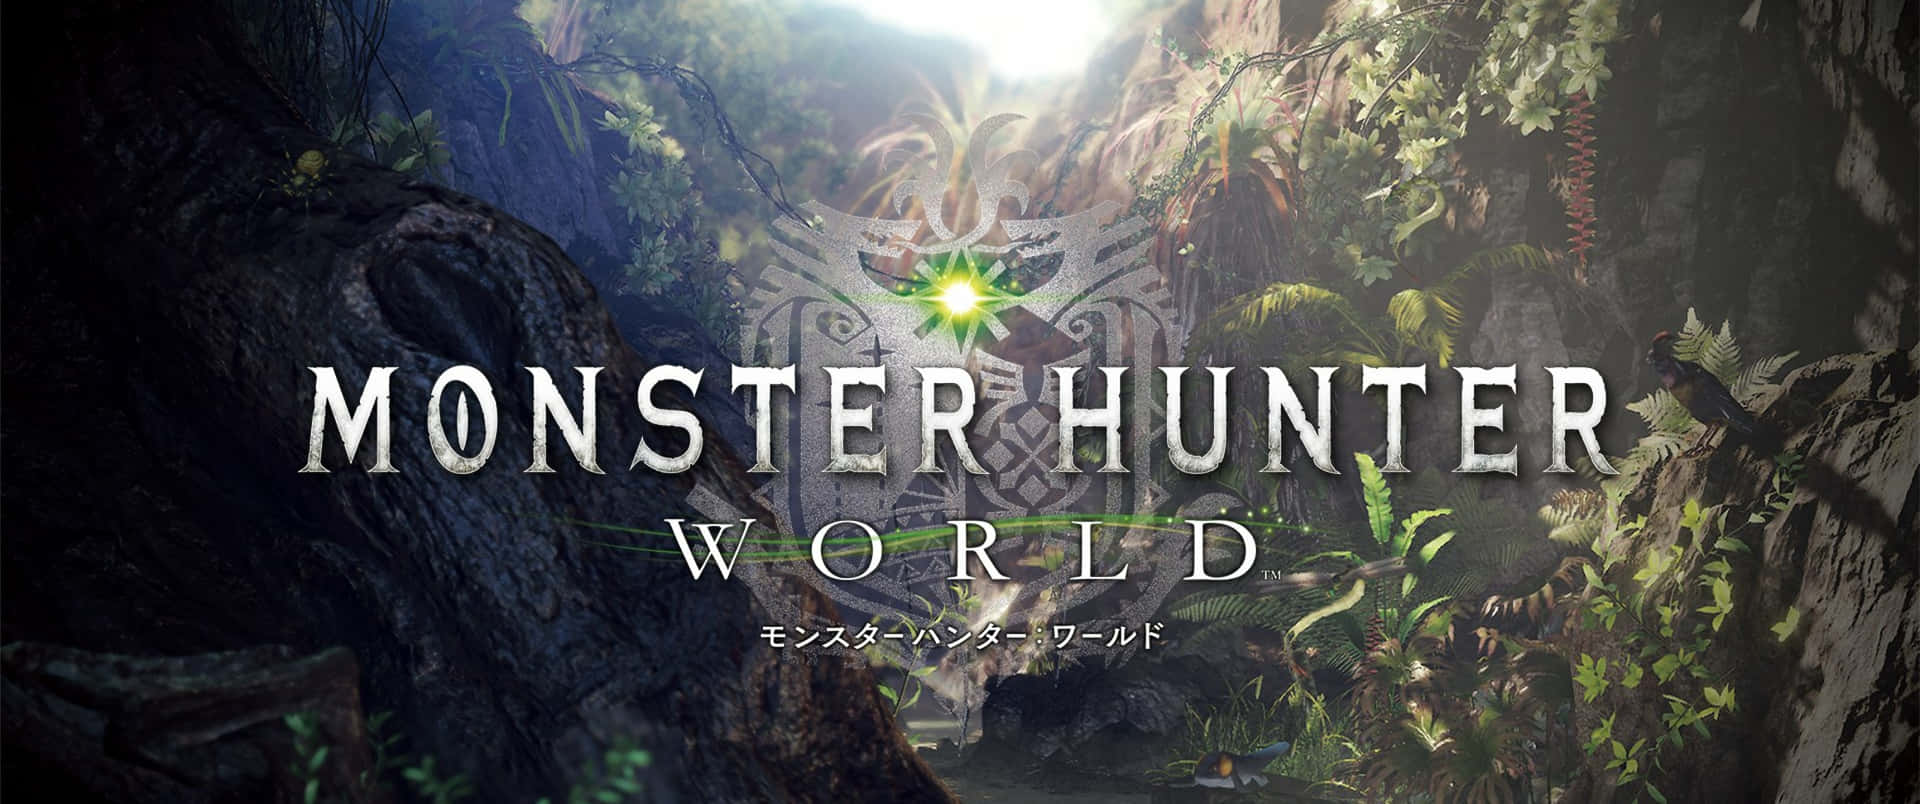 Fondode Pantalla De Monster Hunter World En Formato 3440x1440p